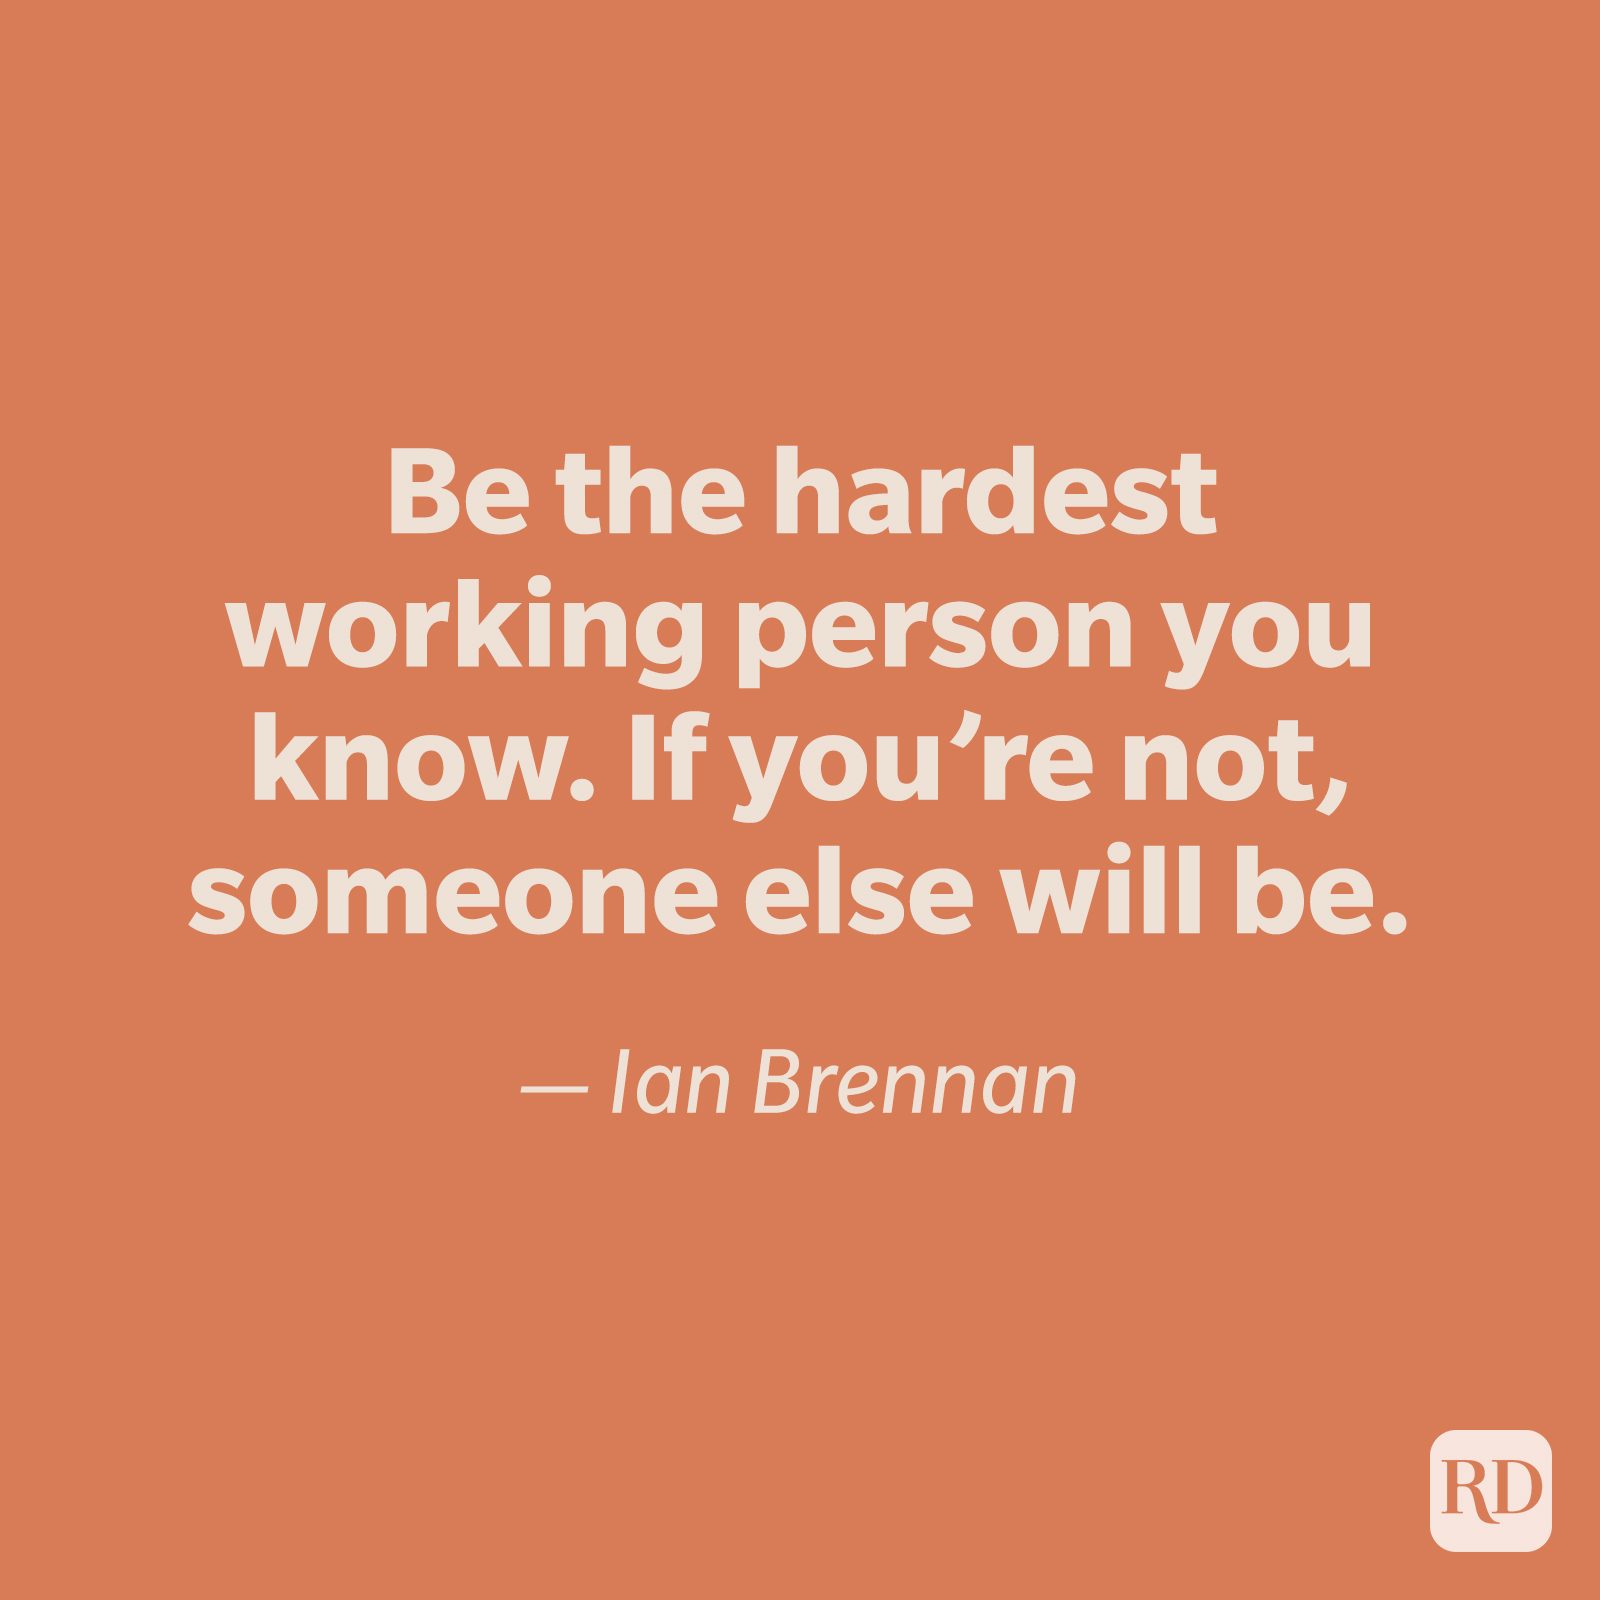 Ian Brennan quote